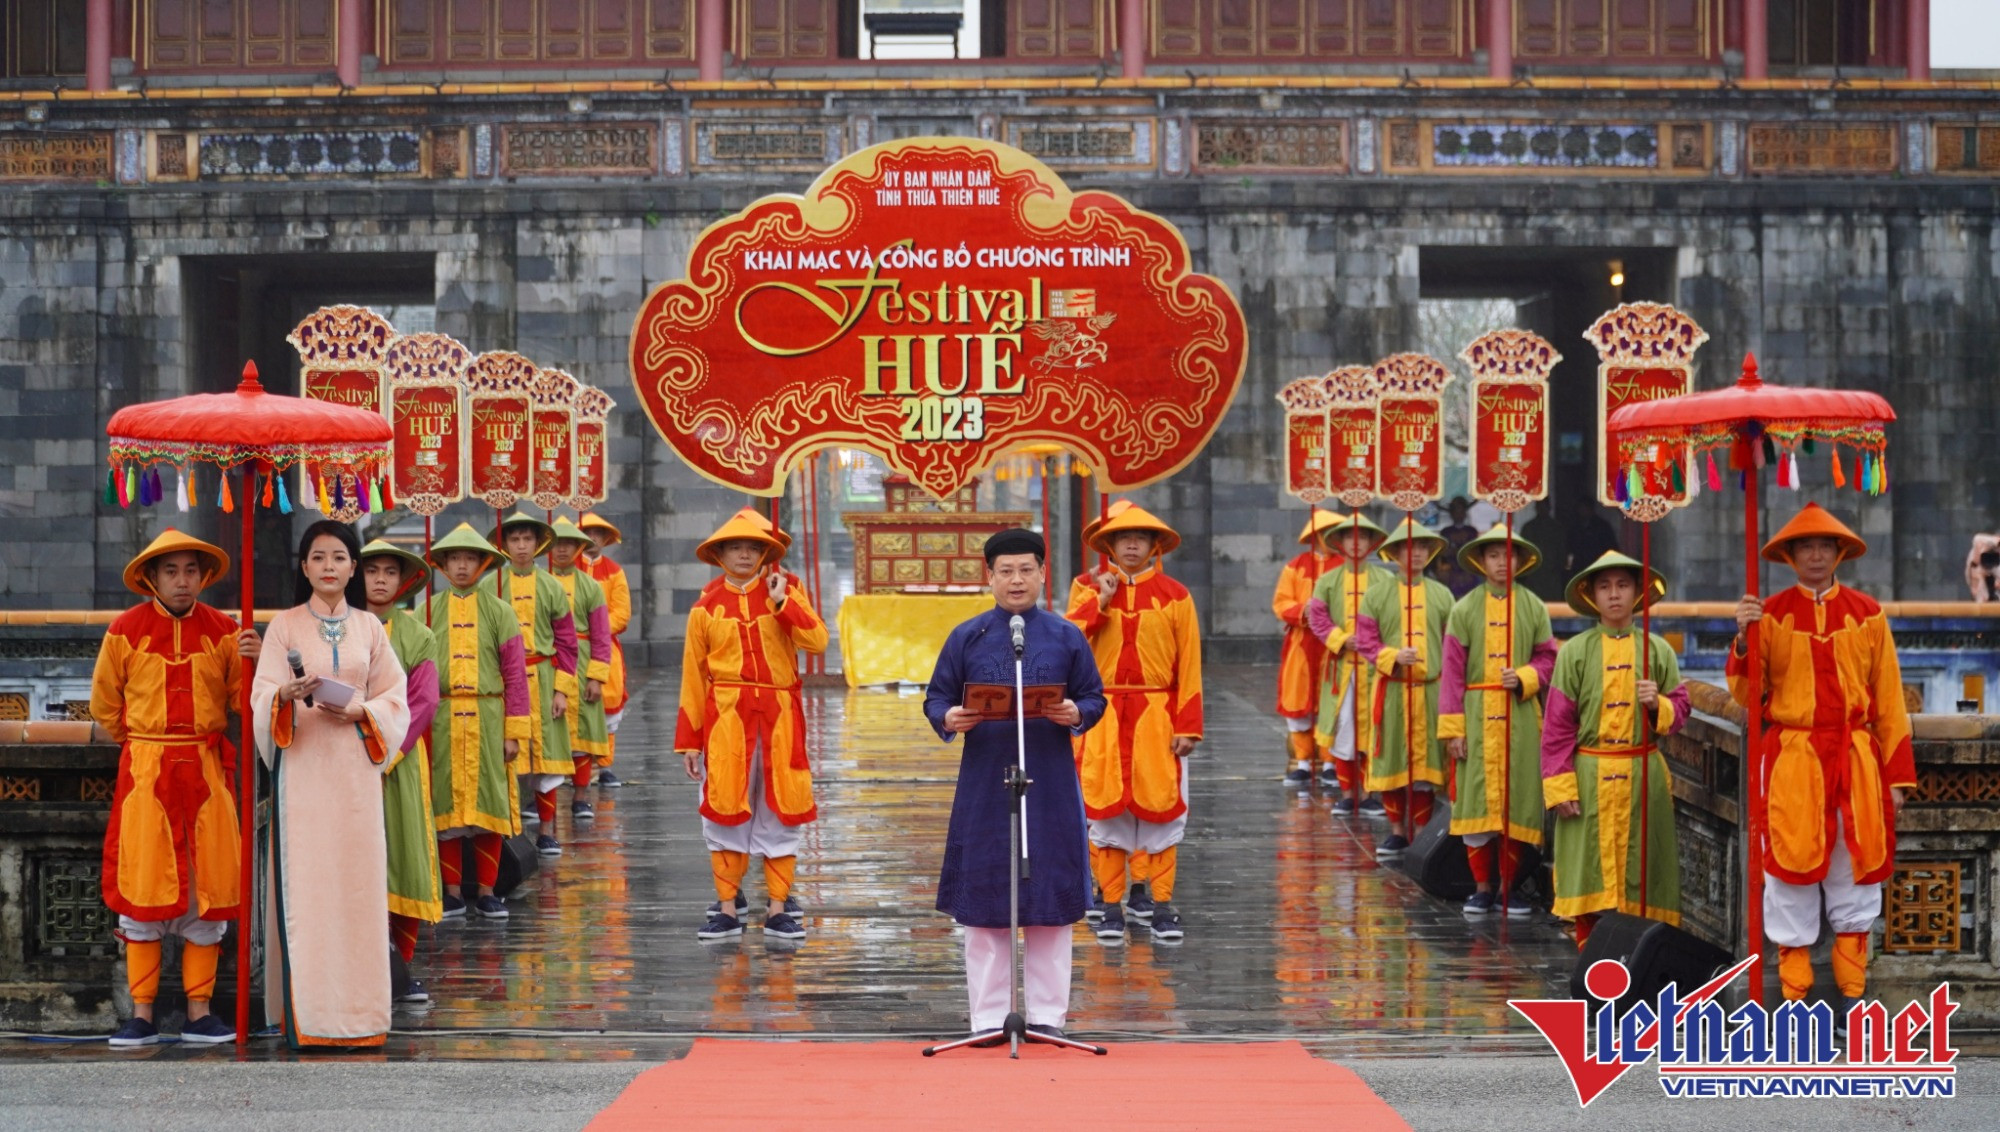 Hue celebrates Tet with reenactment of royal style pole ceremony